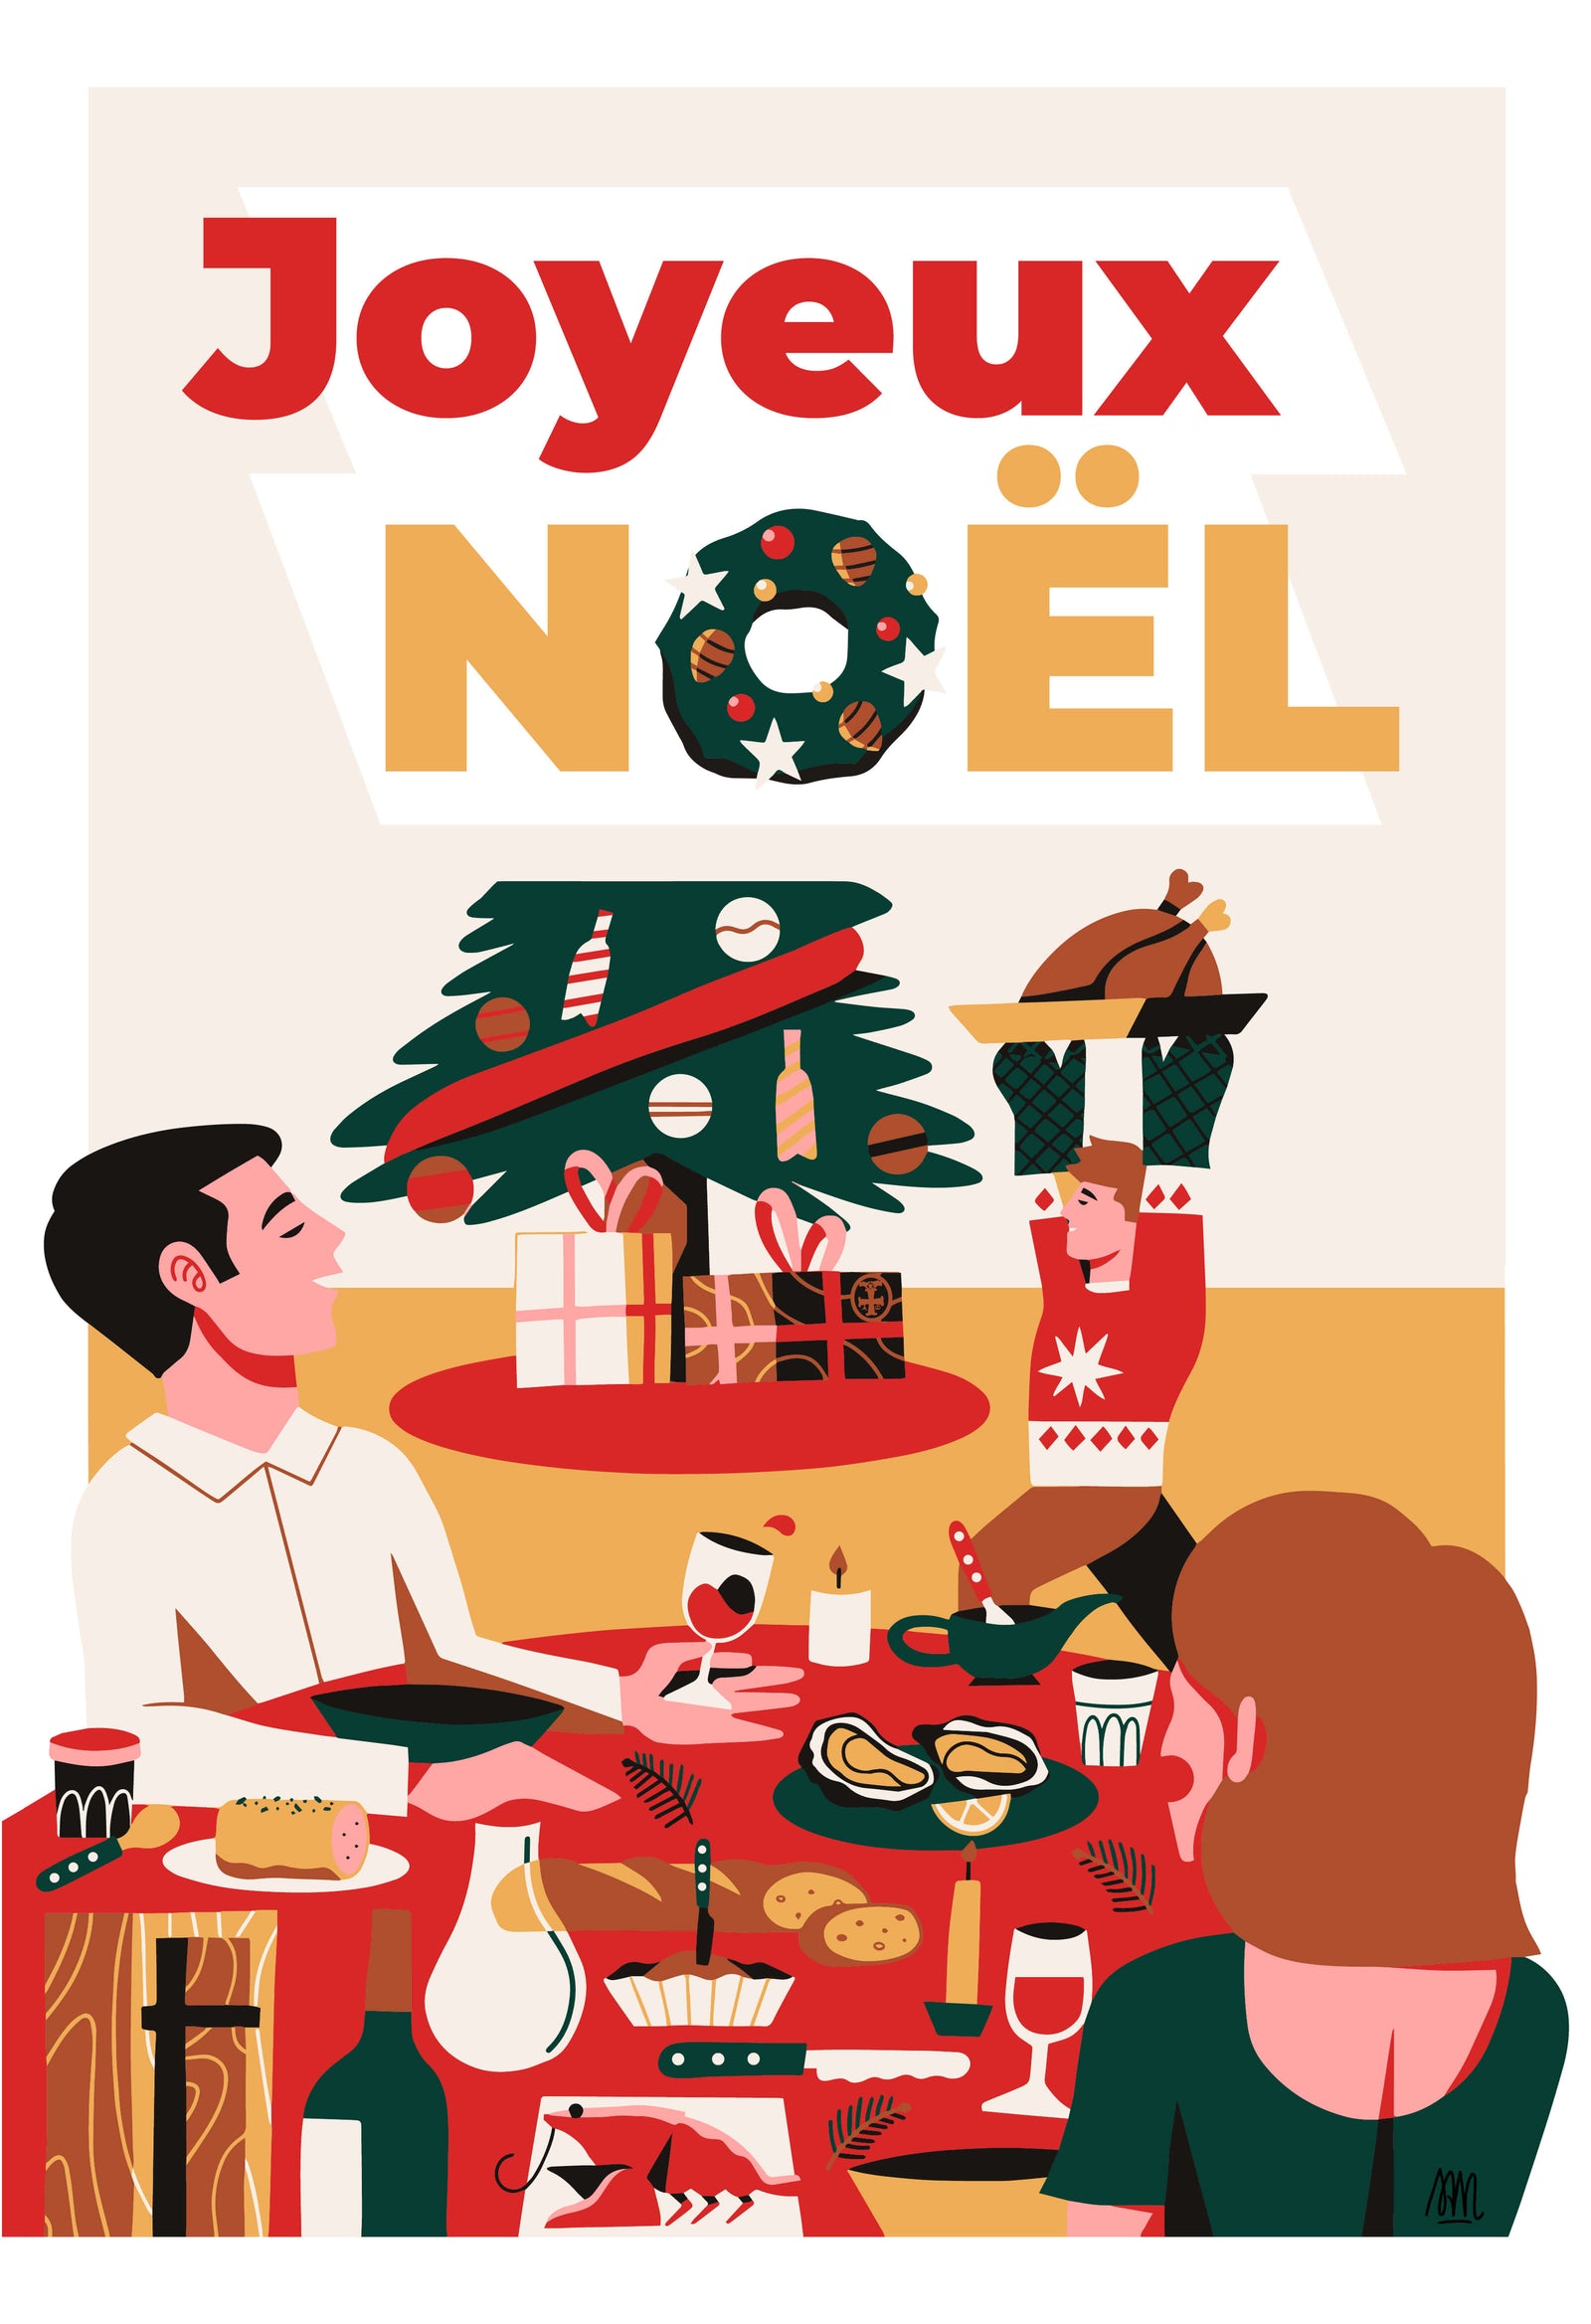 Joyeux Noel Repas de Noel 2020 Gérard Bertrand Illustration famille dinde pere mere enfant sapin